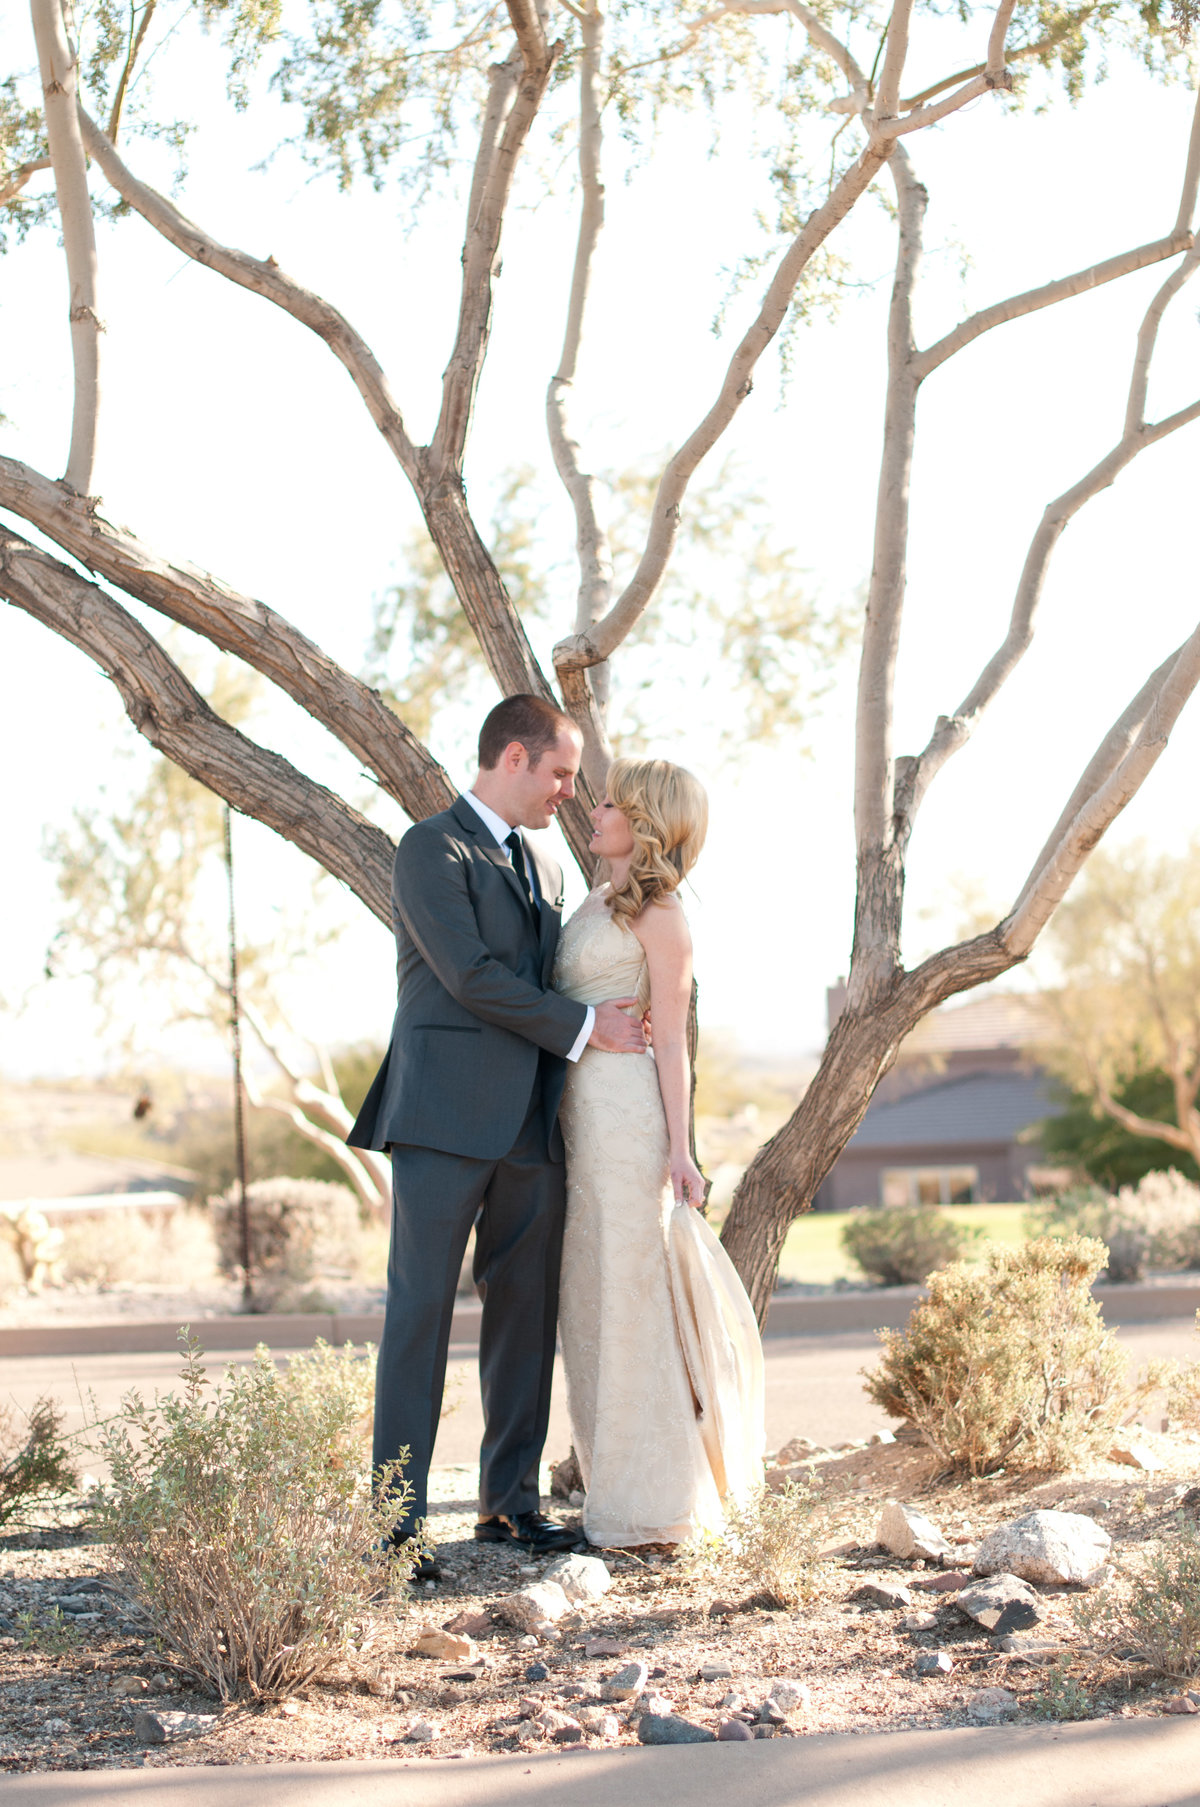 Outdoor Wedding Photographer in Scottsdale. Phoenix Outdoor Wedding Photographer. Dessert Wedding Photographer. Luxury desert wedding in Scottsdale.